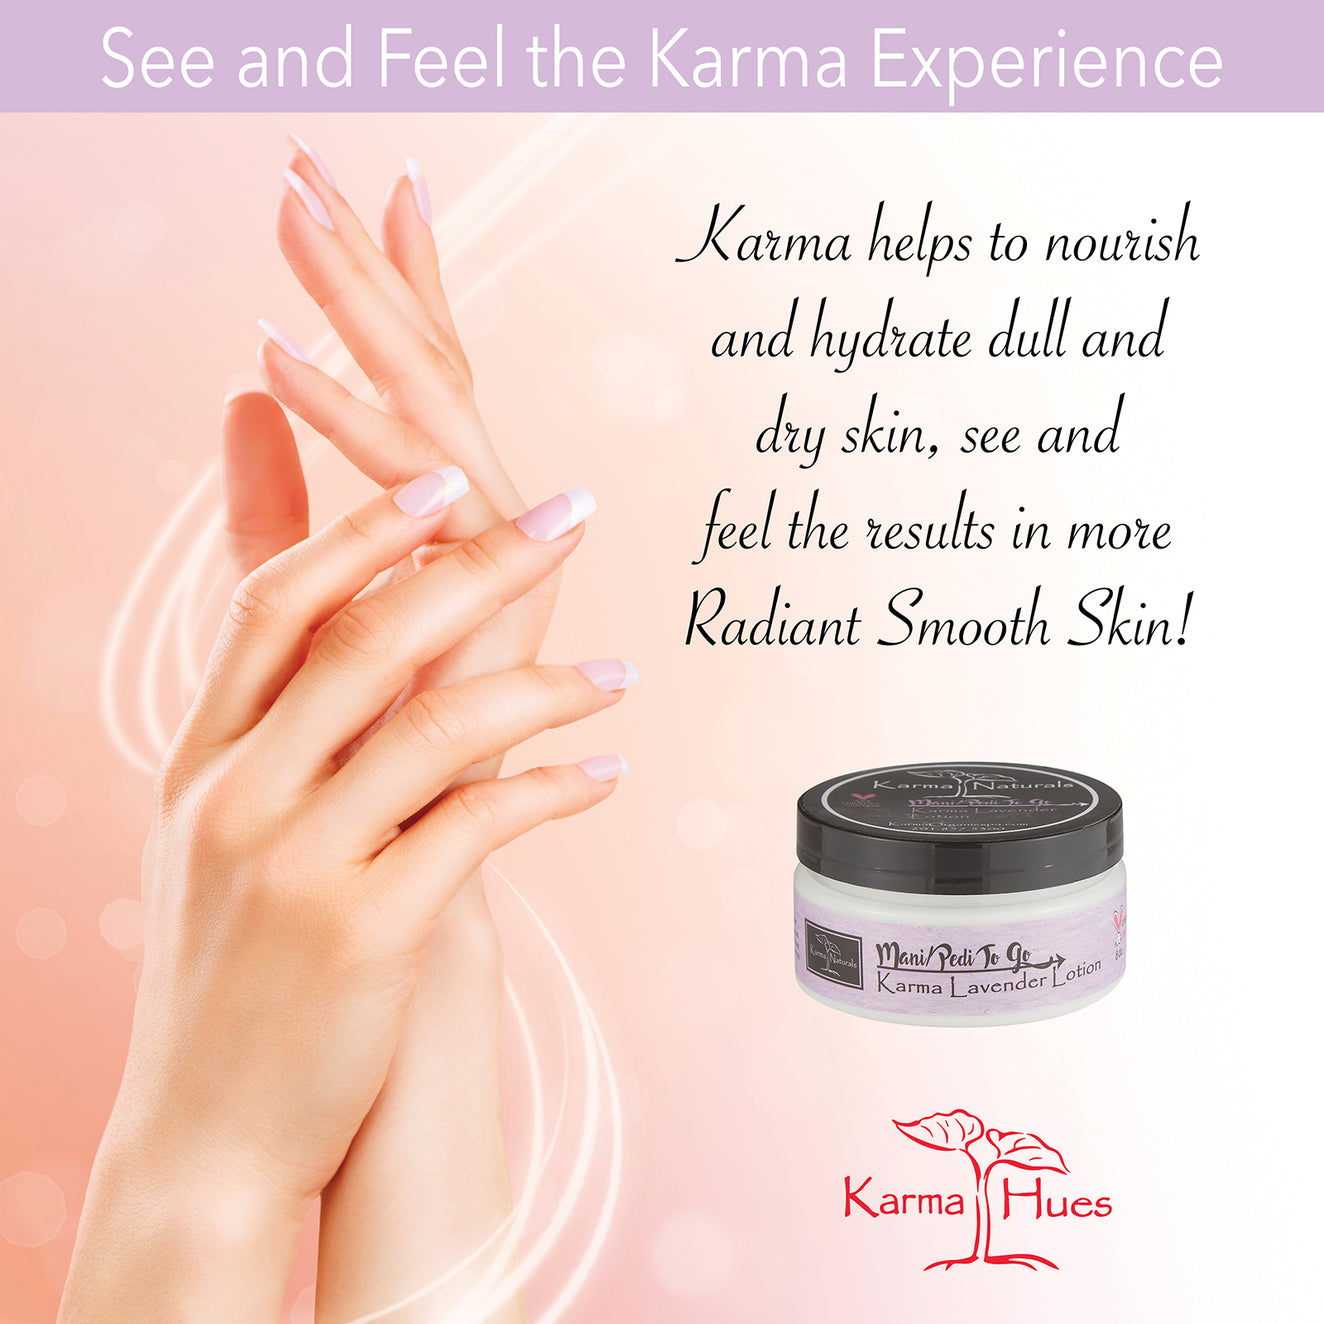 Karma Naturals Lavender Lotion